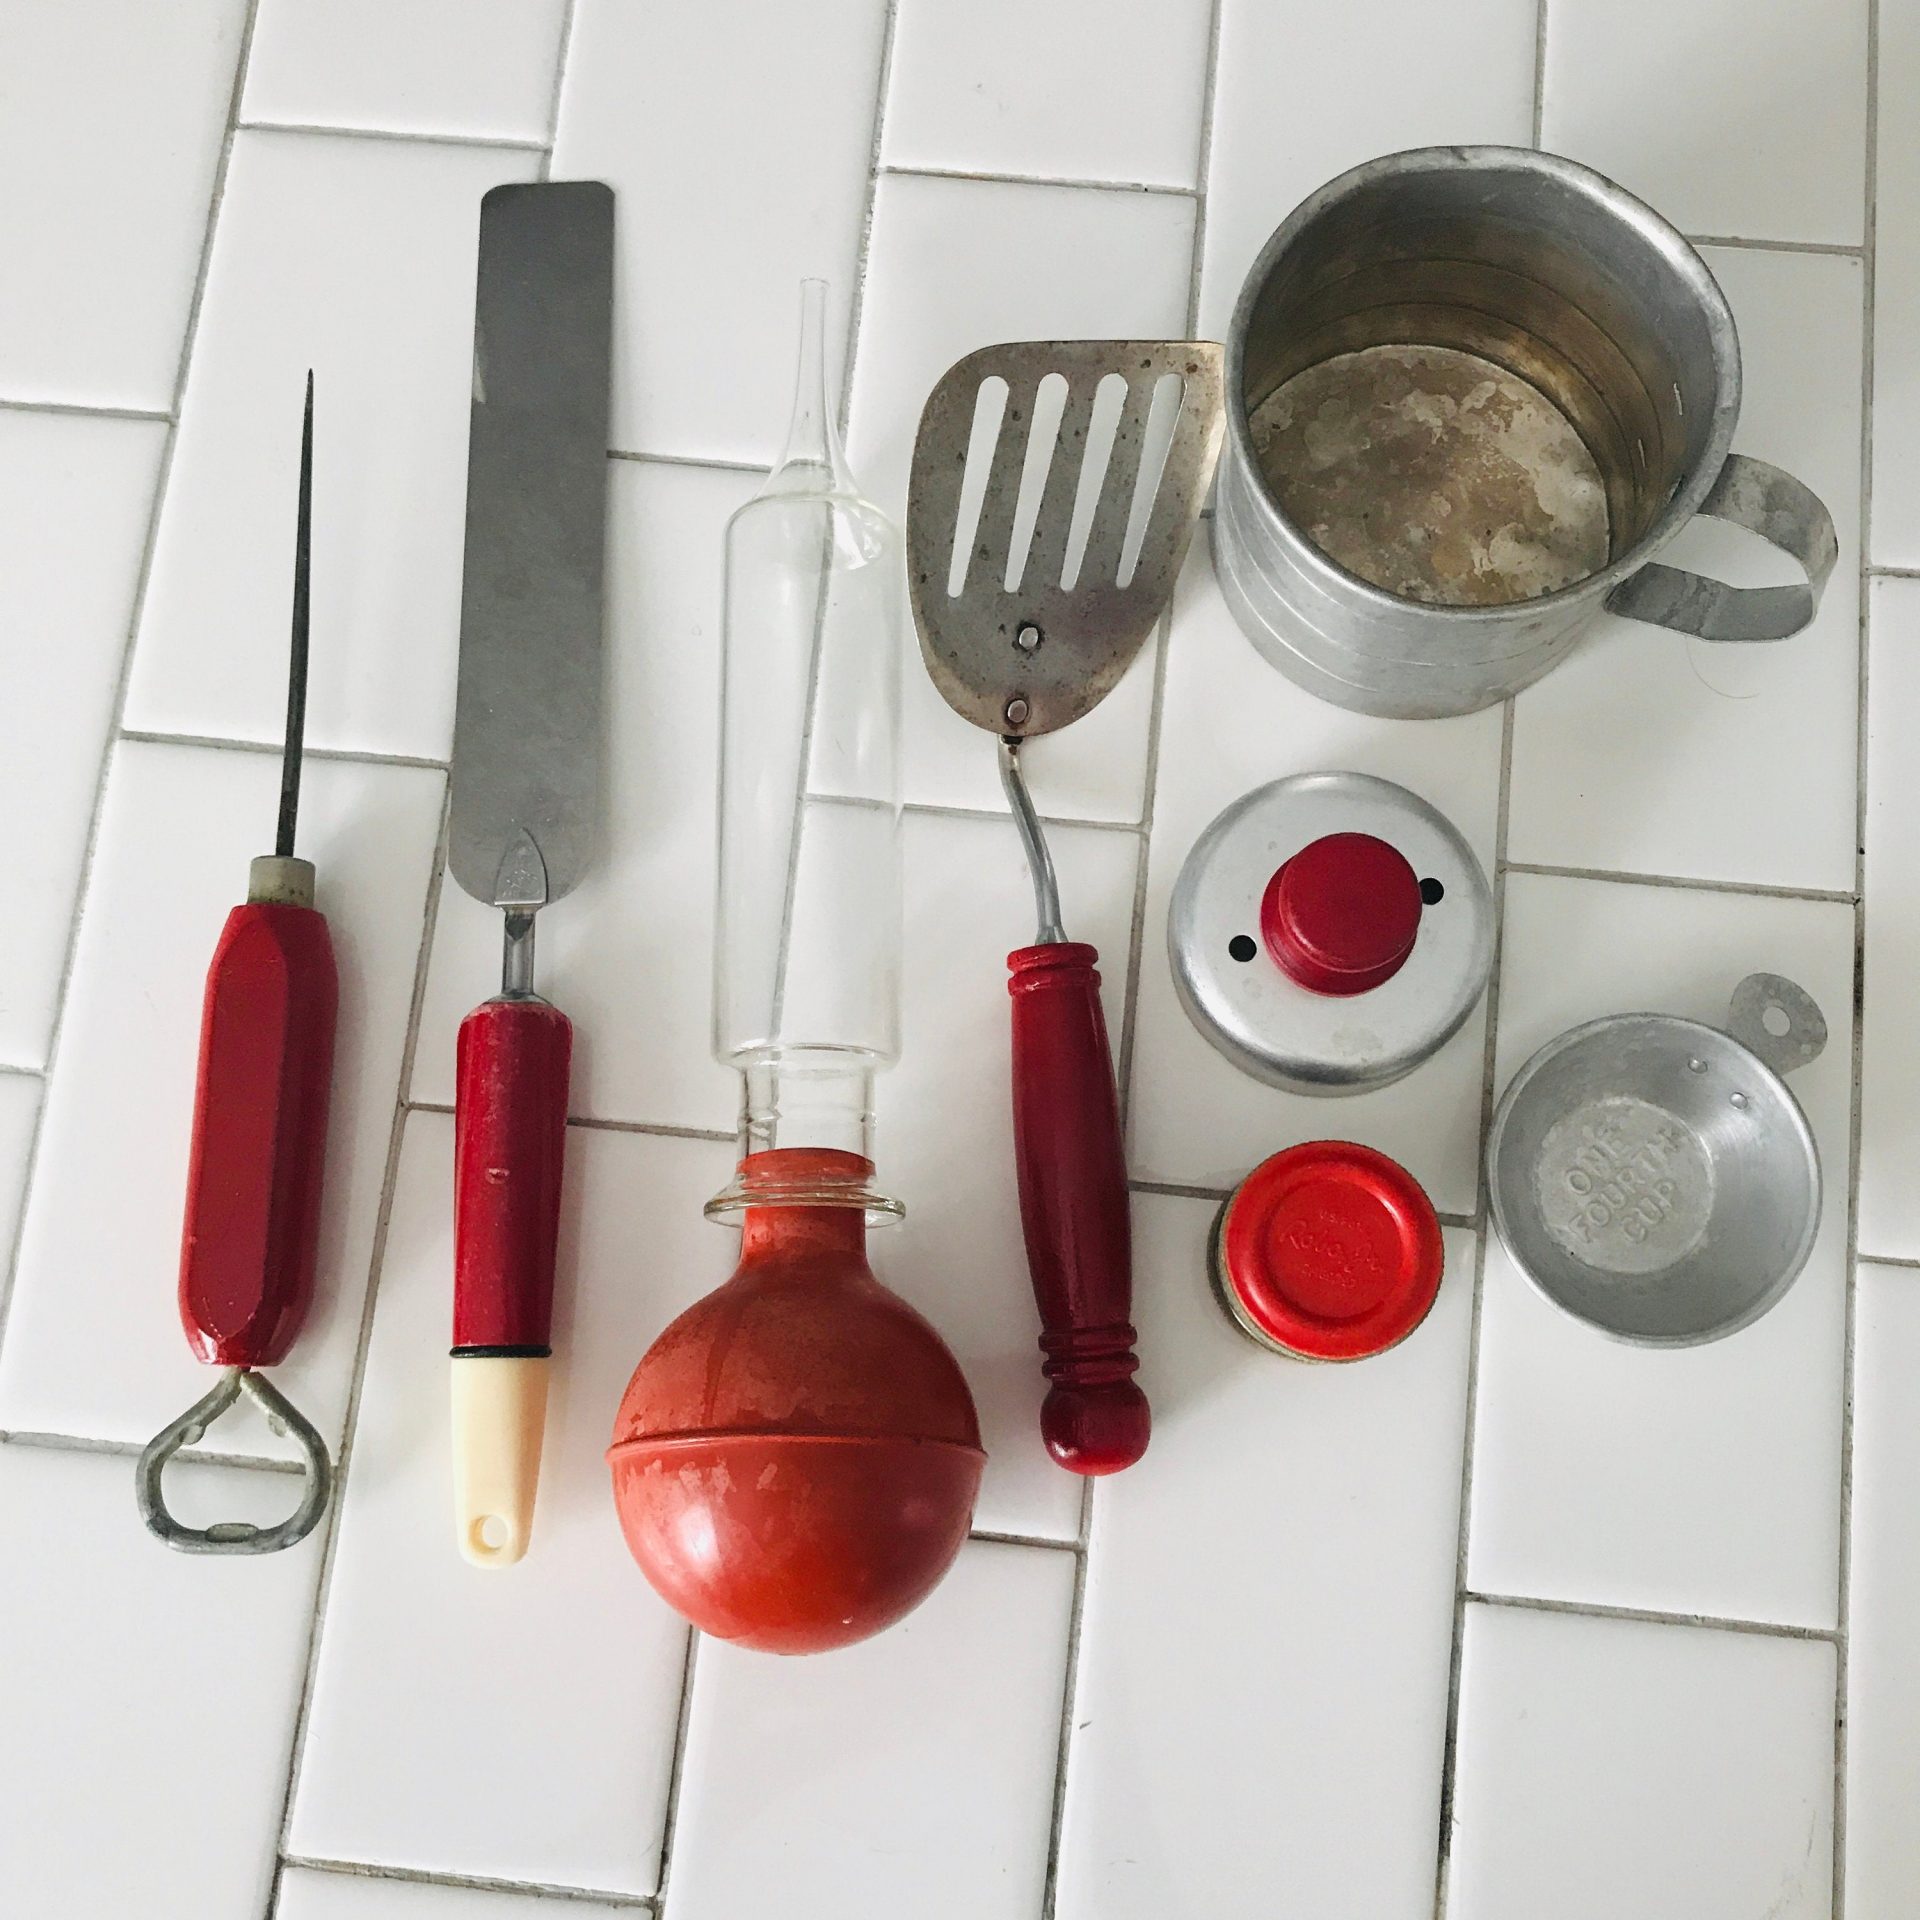 https://www.truevintageantiques.com/wp-content/uploads/2020/10/vintage-lot-of-kitchen-gadgets-mid-century-baster-spatula-measuring-cup-cookie-cutter-knife-sharpener-bottle-opener-ice-pick-5f823c8e2-scaled.jpg